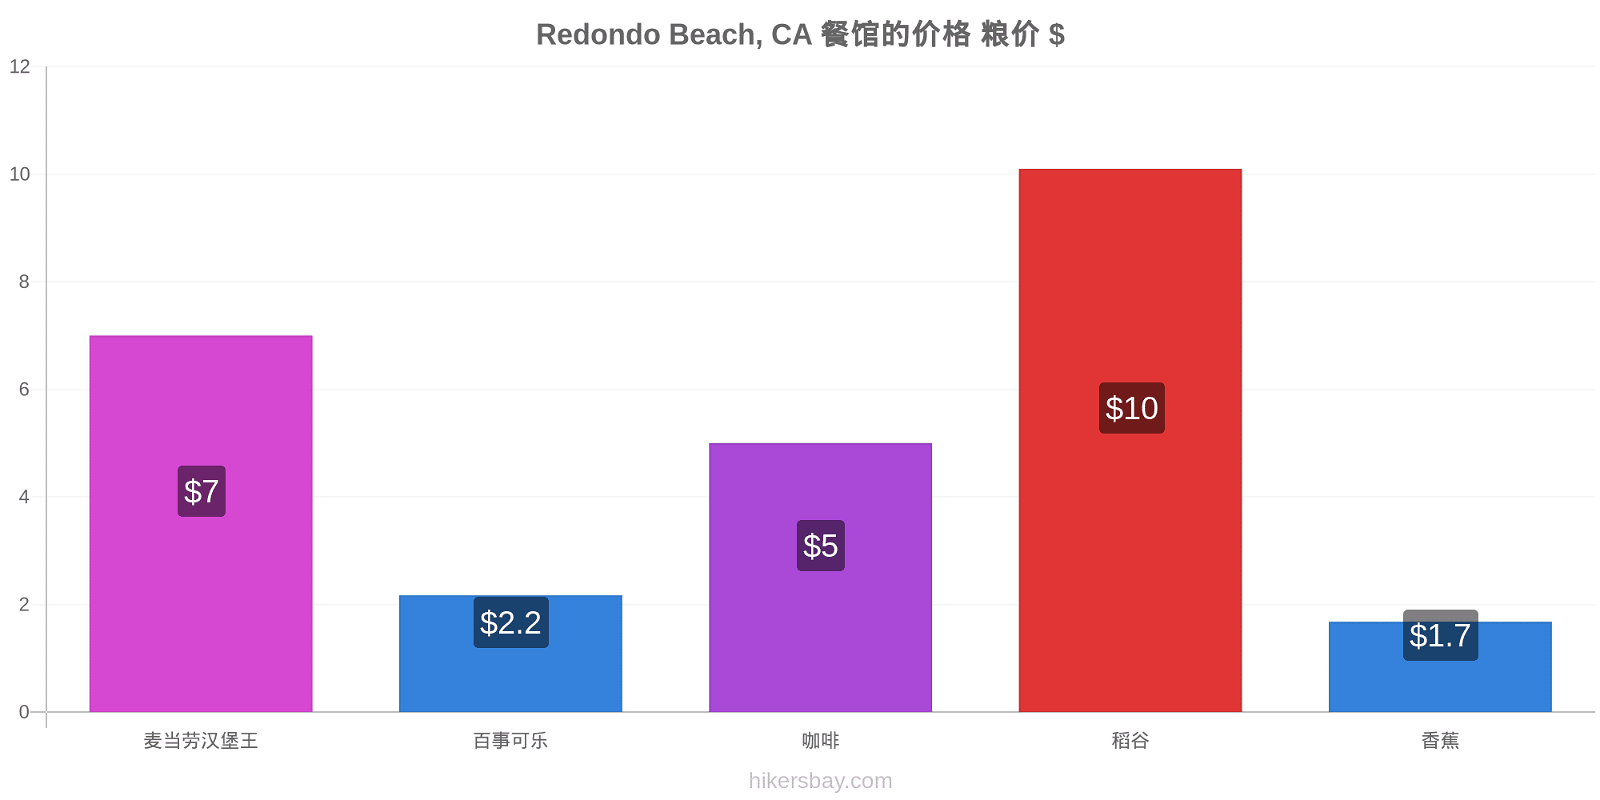 Redondo Beach, CA 价格变动 hikersbay.com